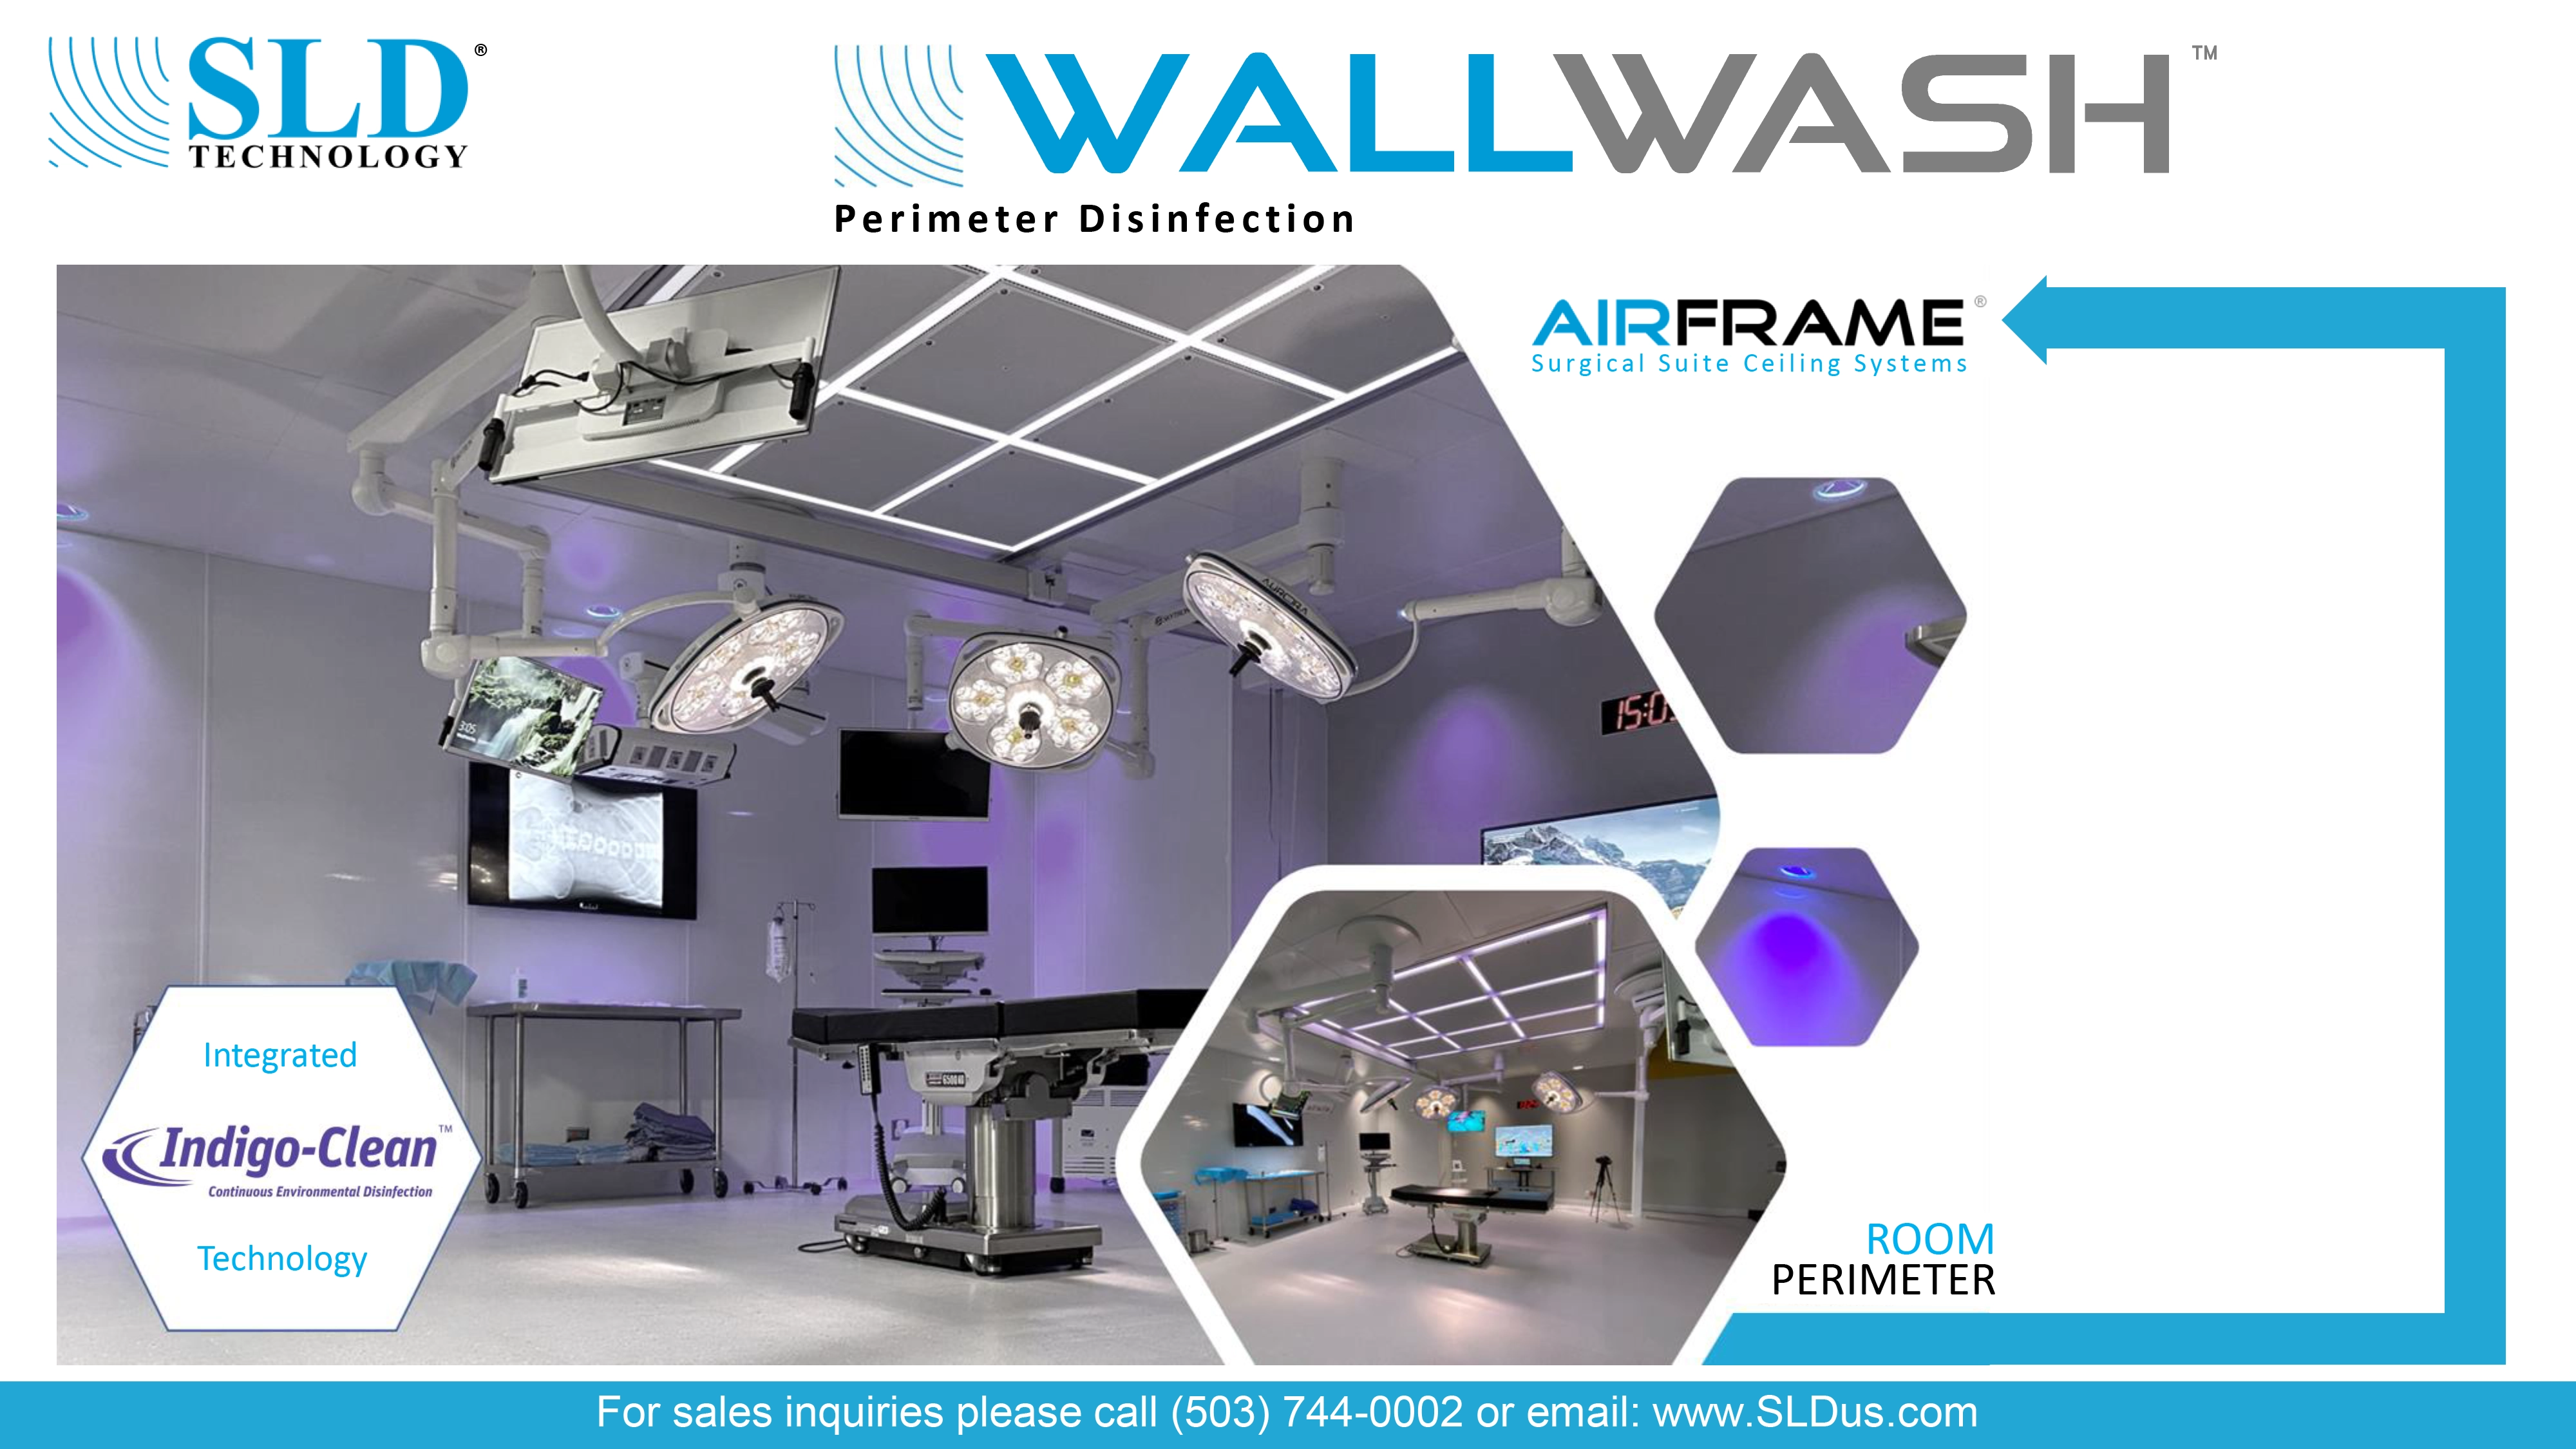 Information about WallWASH